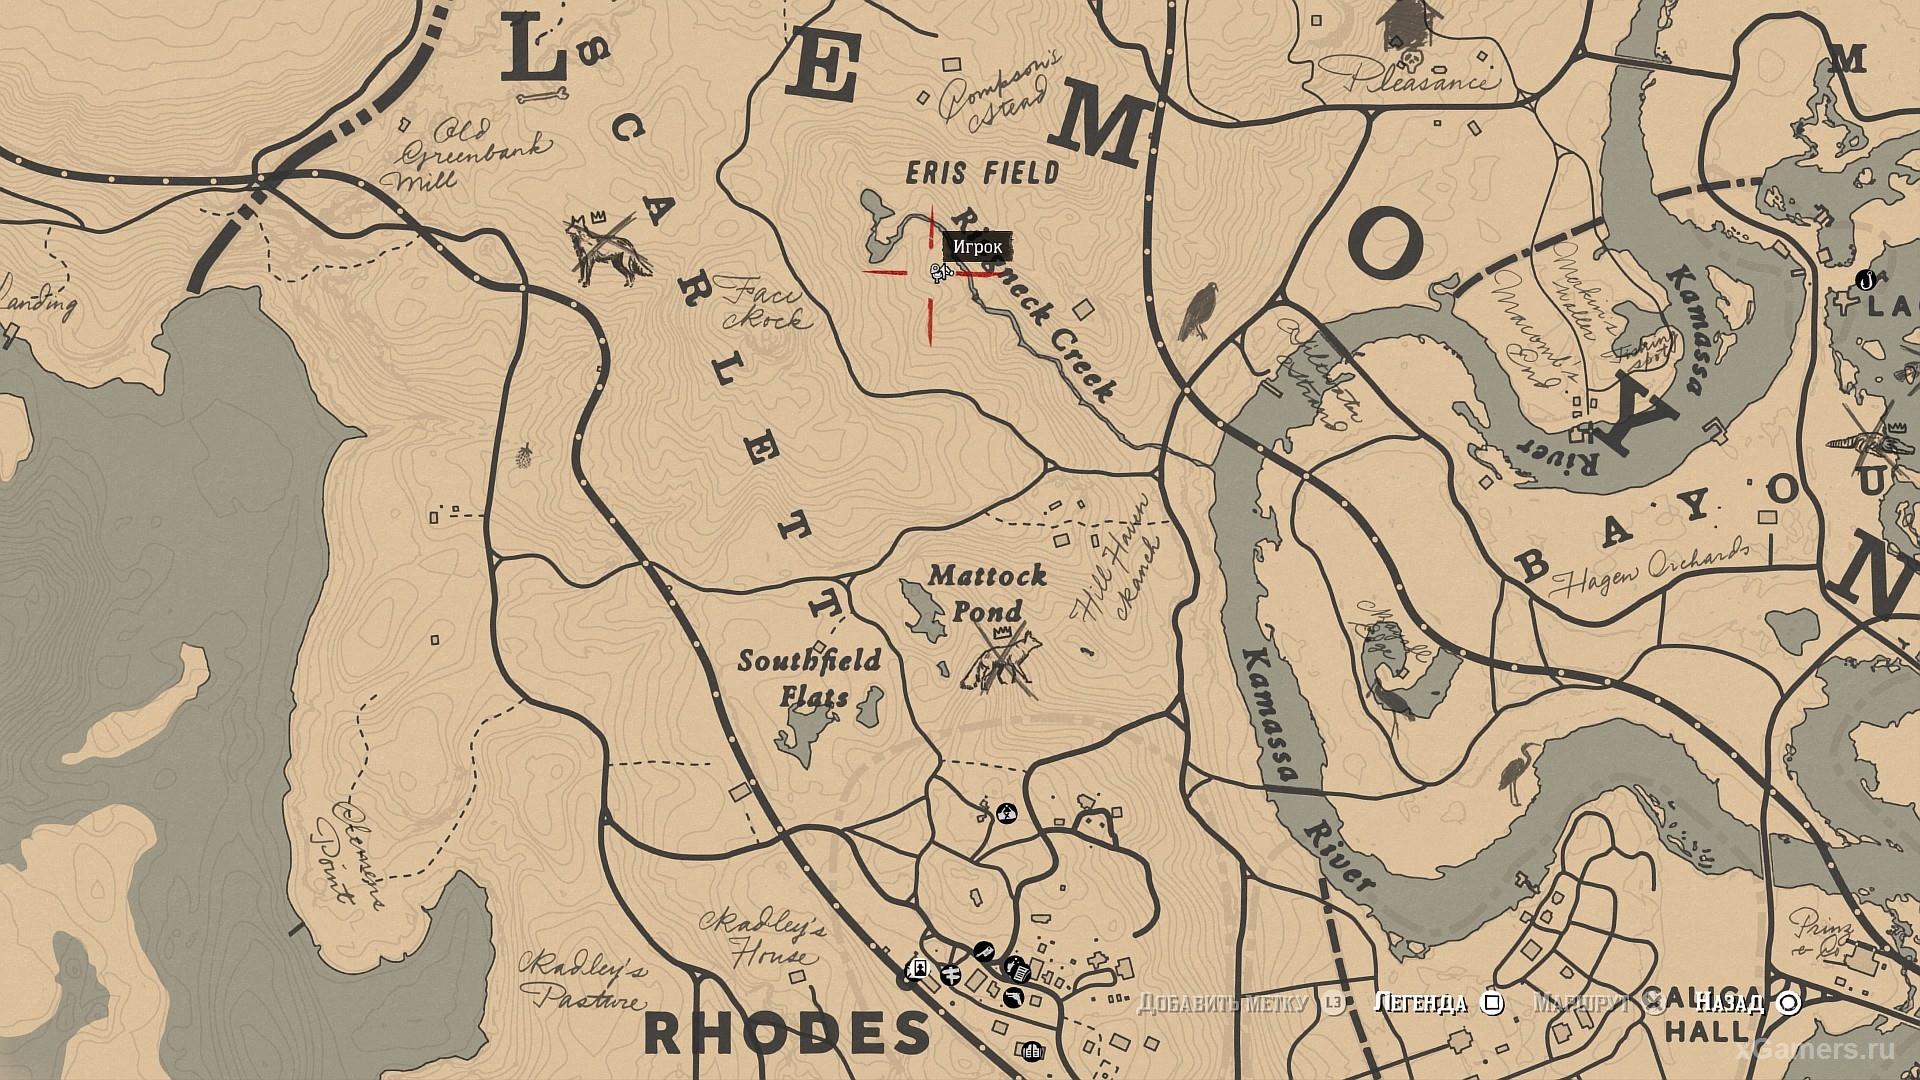 Mark on the map where chanterelles grow